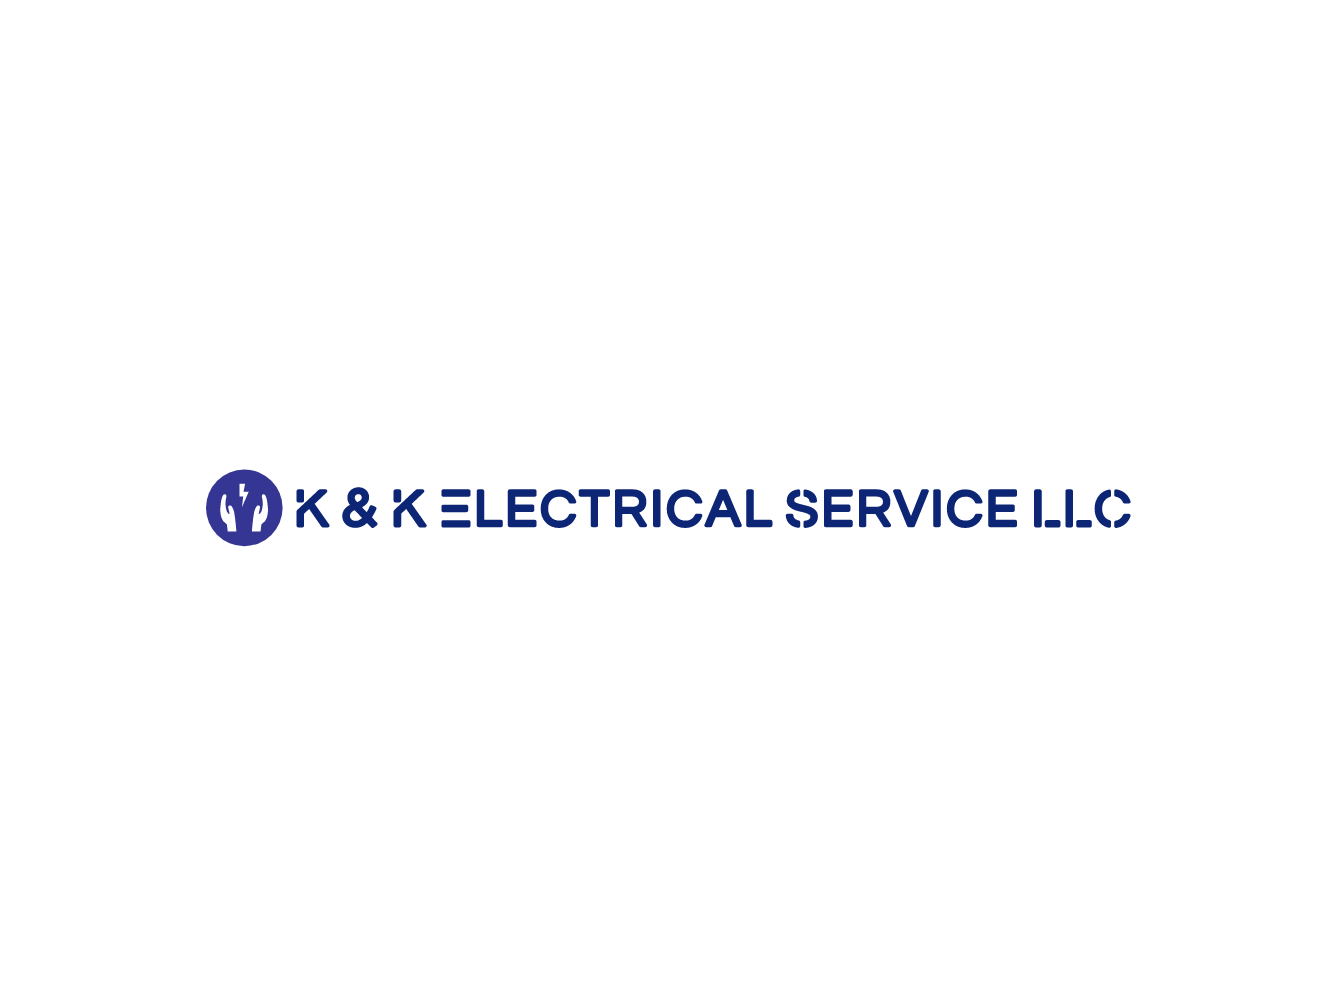 K & K Electrical Service Logo